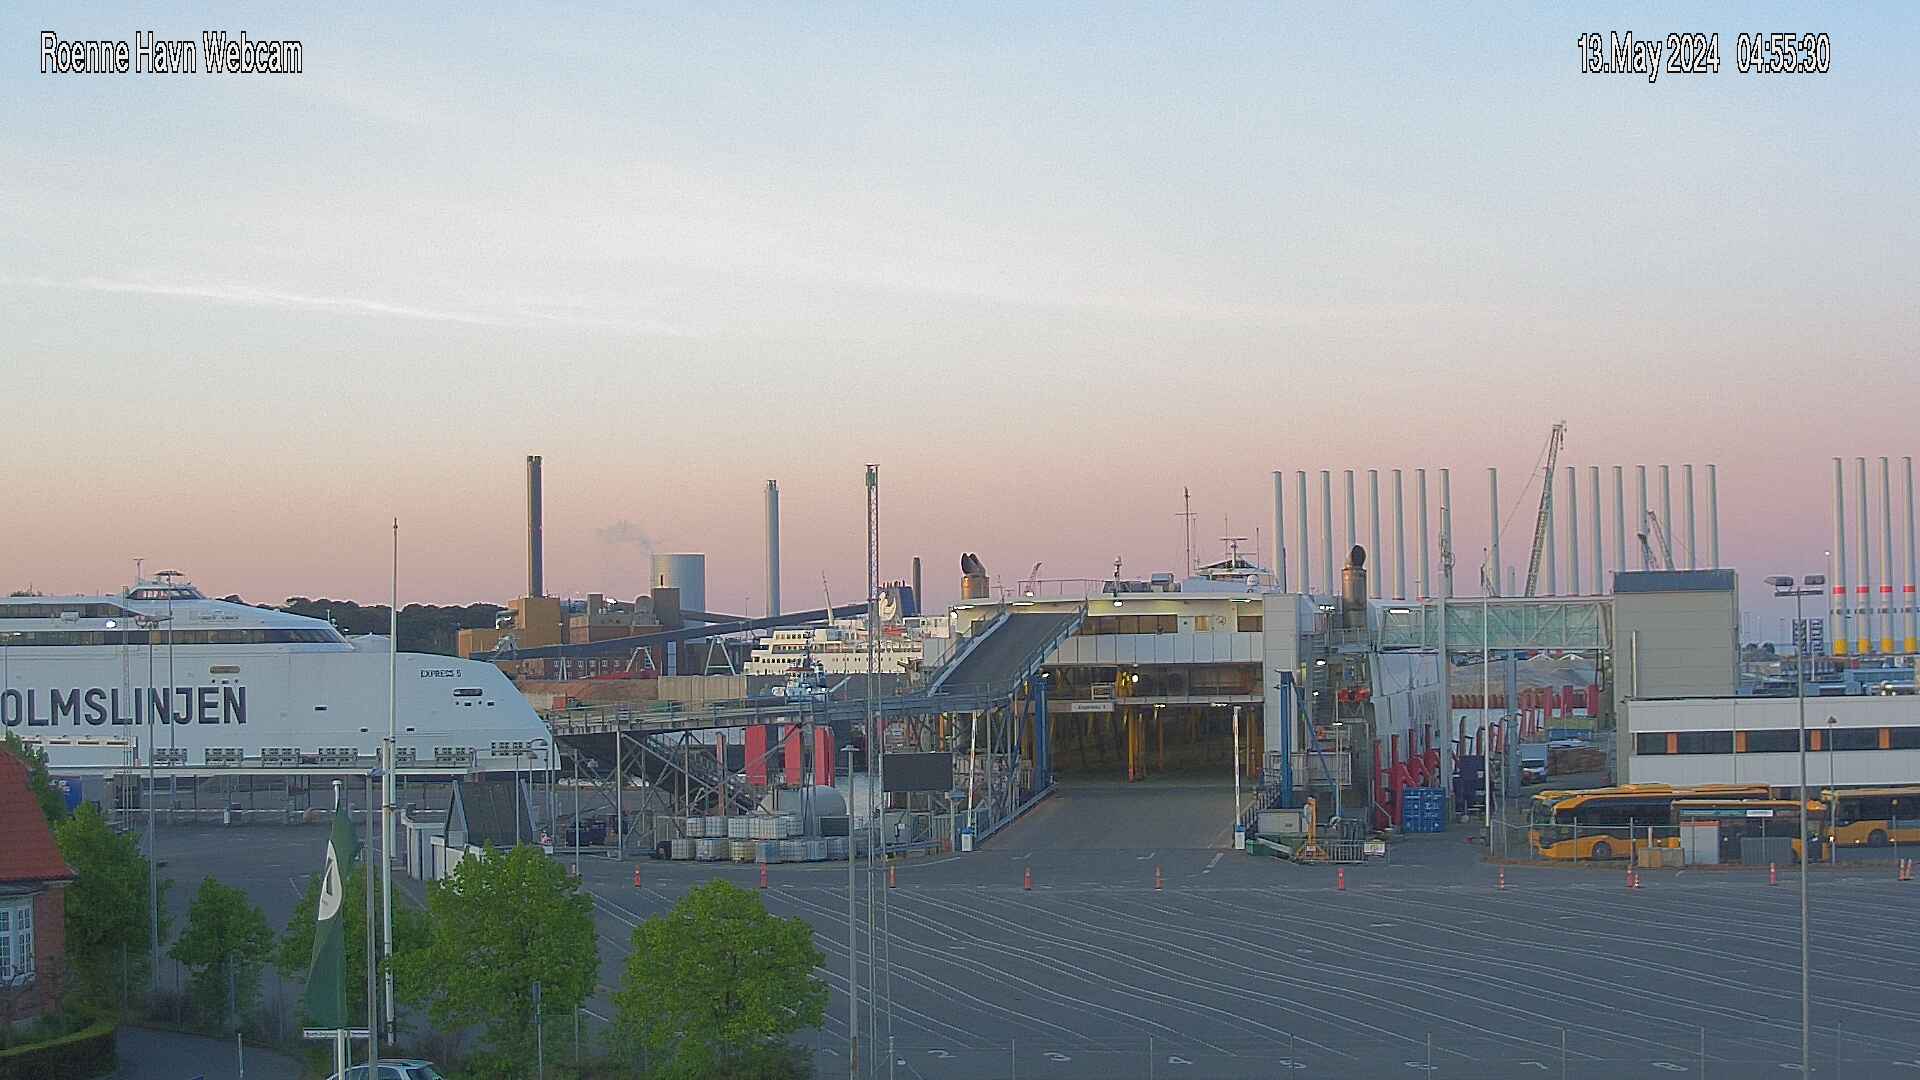 Rønne (Bornholm) Sa. 04:55